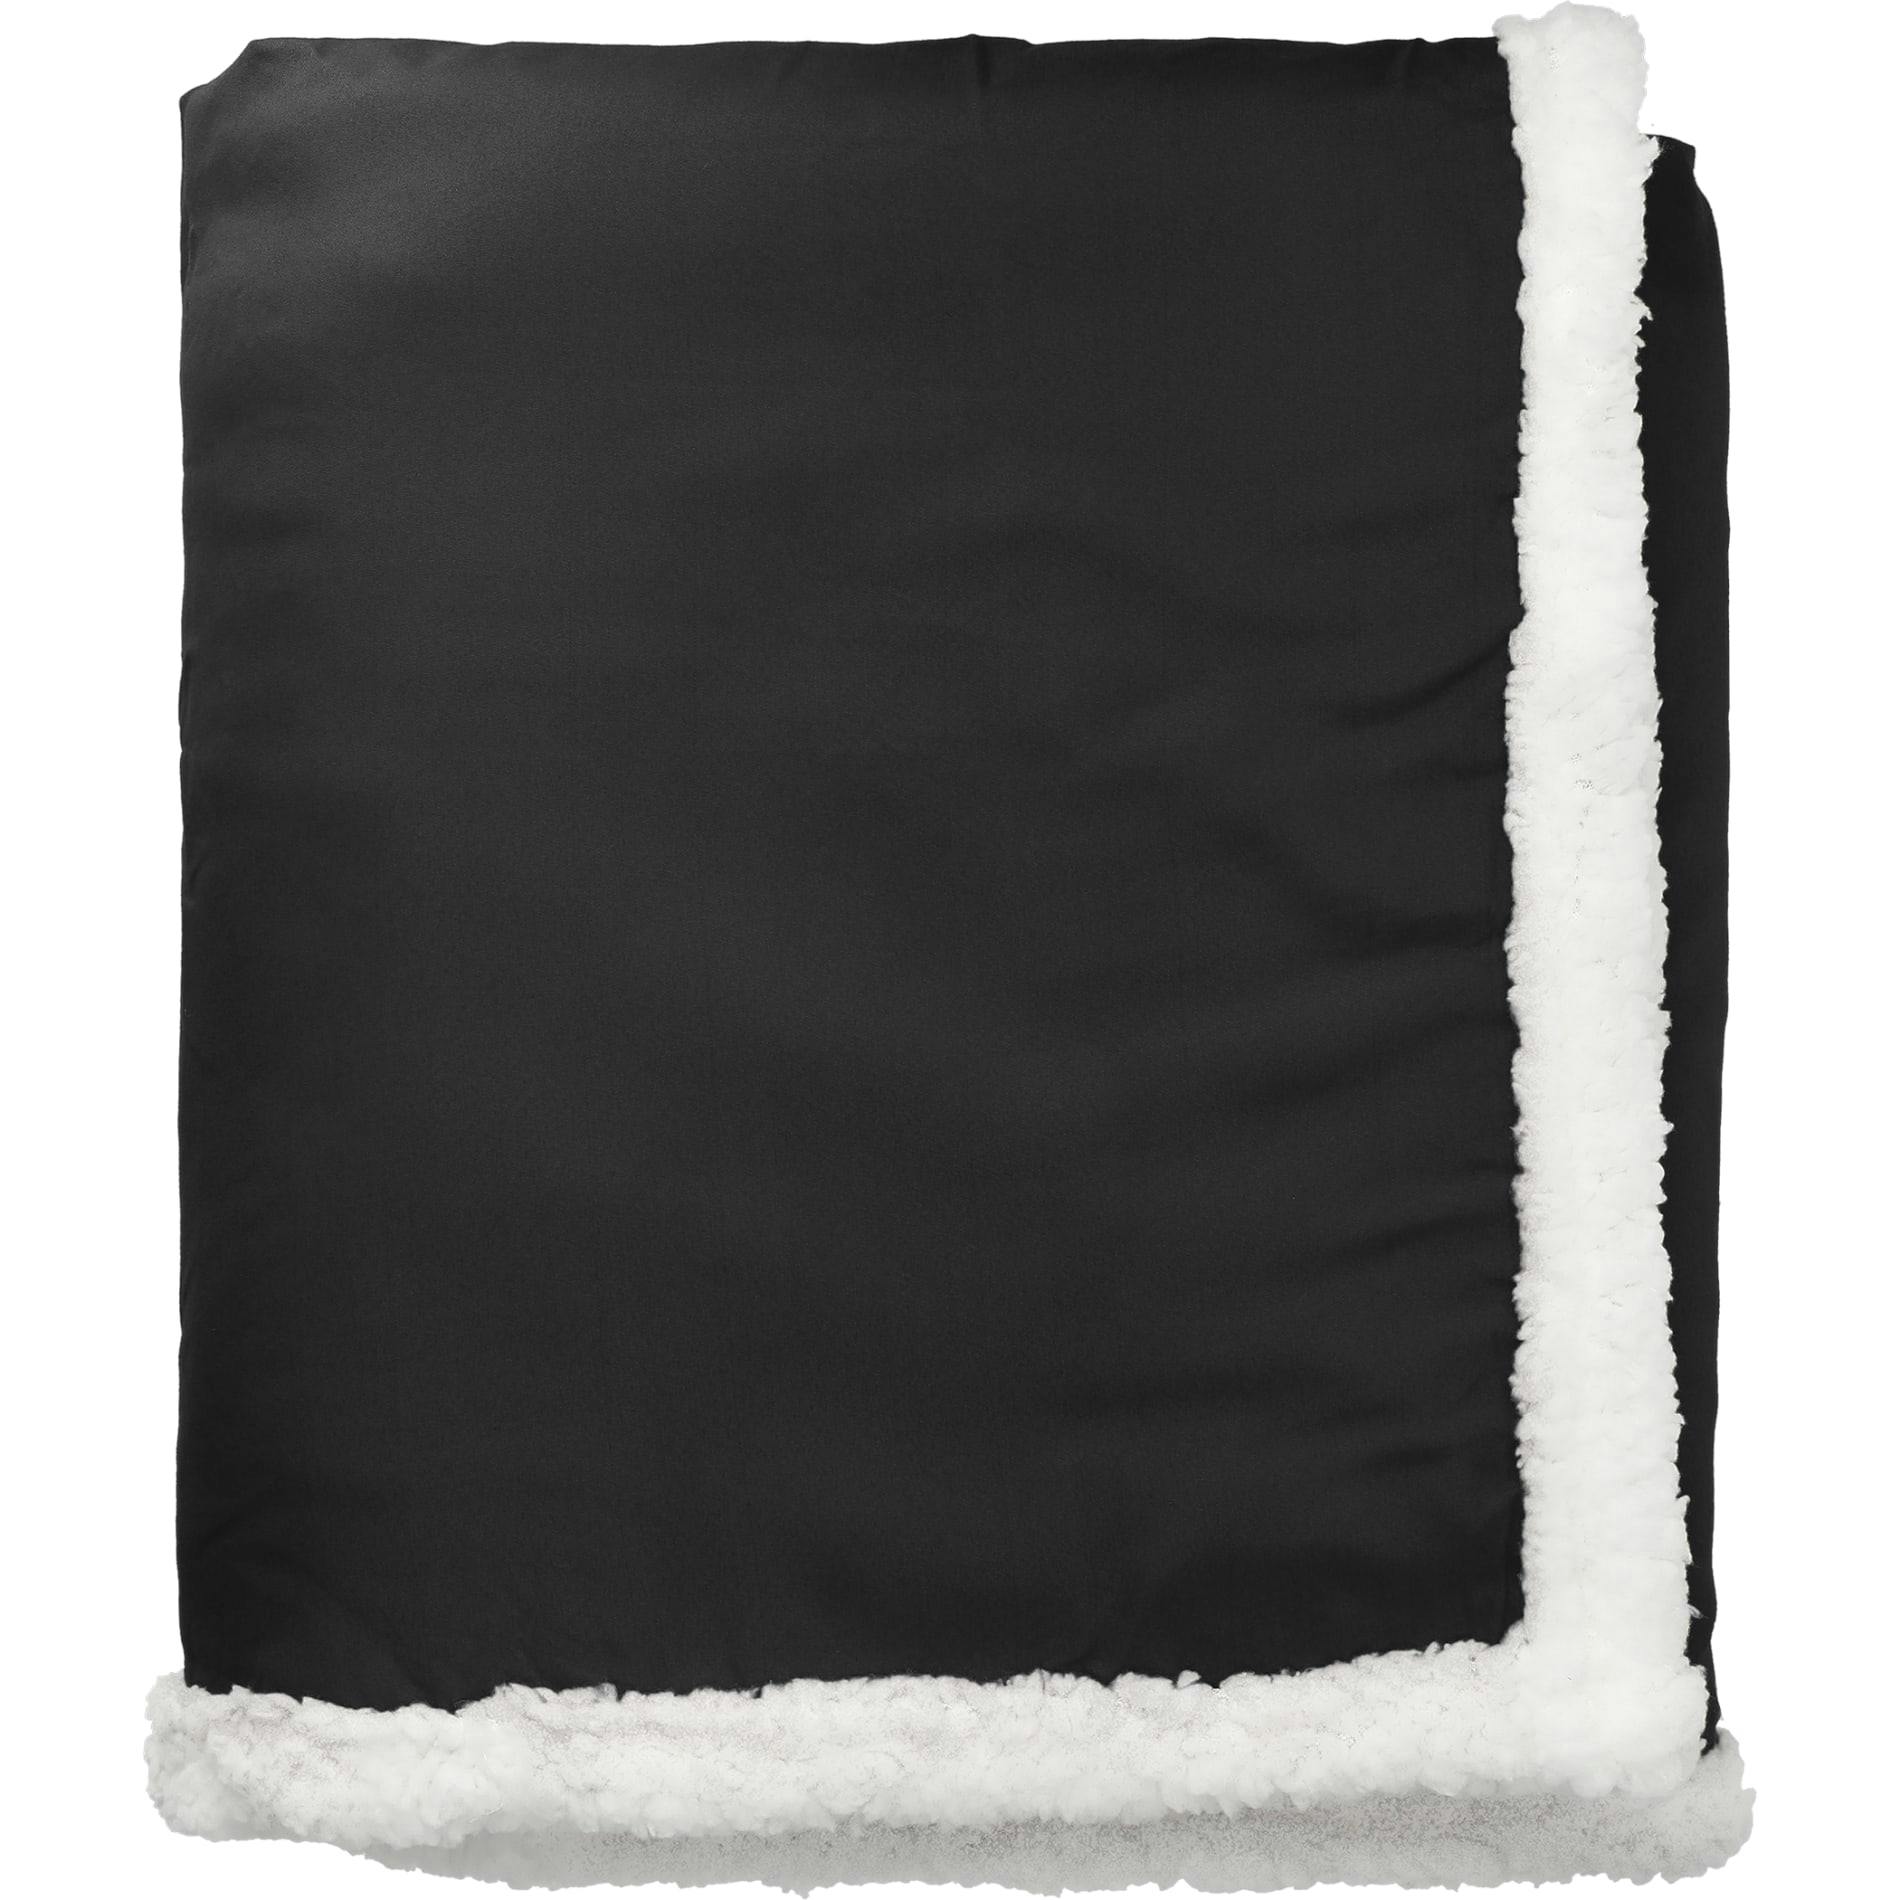 Sherpa Blanket - additional Image 2